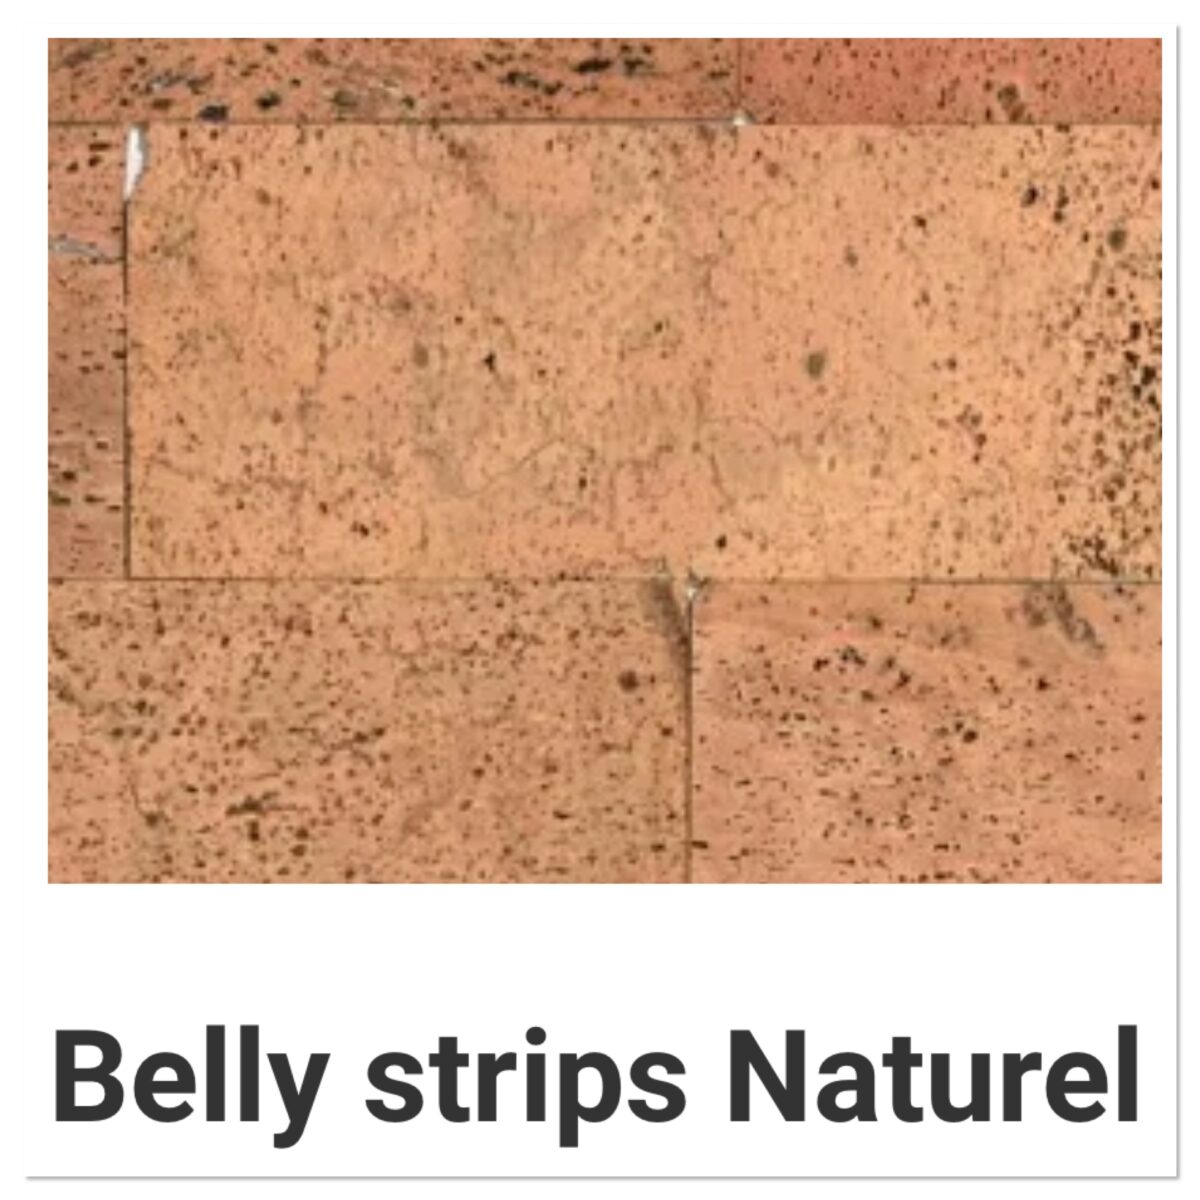 Belly strips